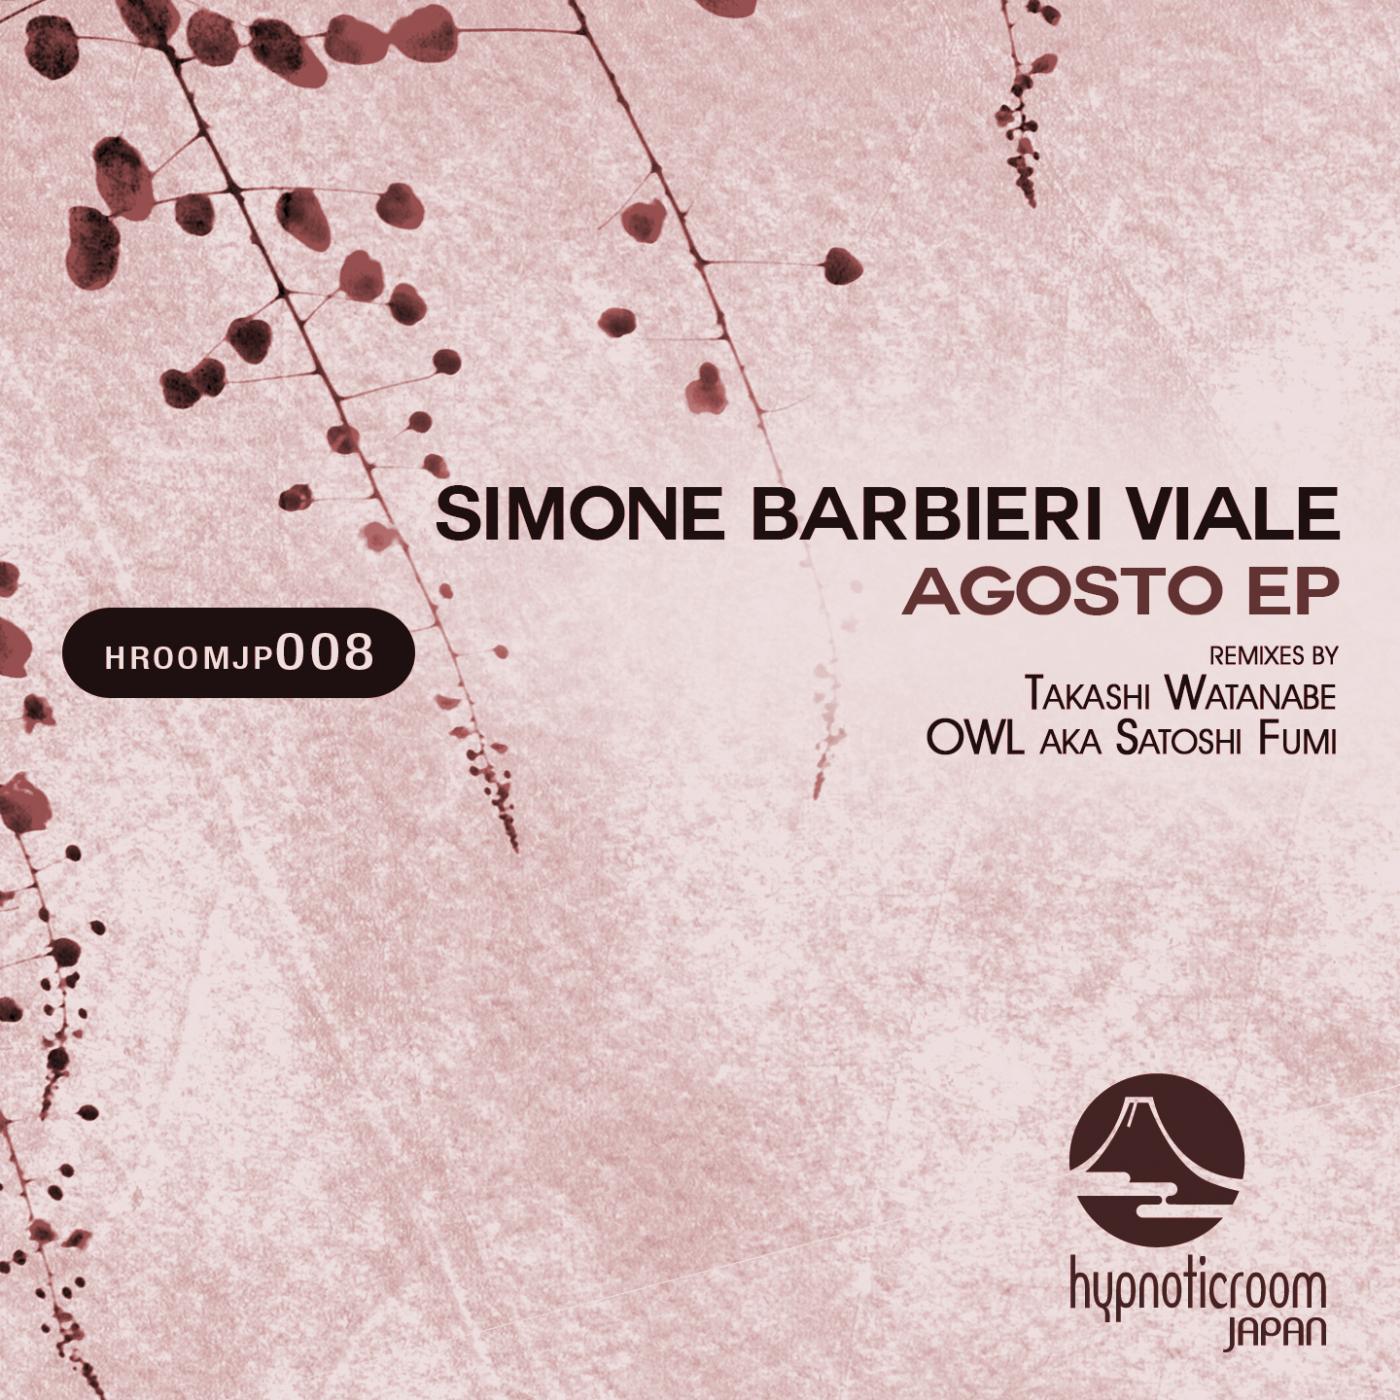 Simone Barbieri Viale - A New Old (Takashi Watanabe Remix)